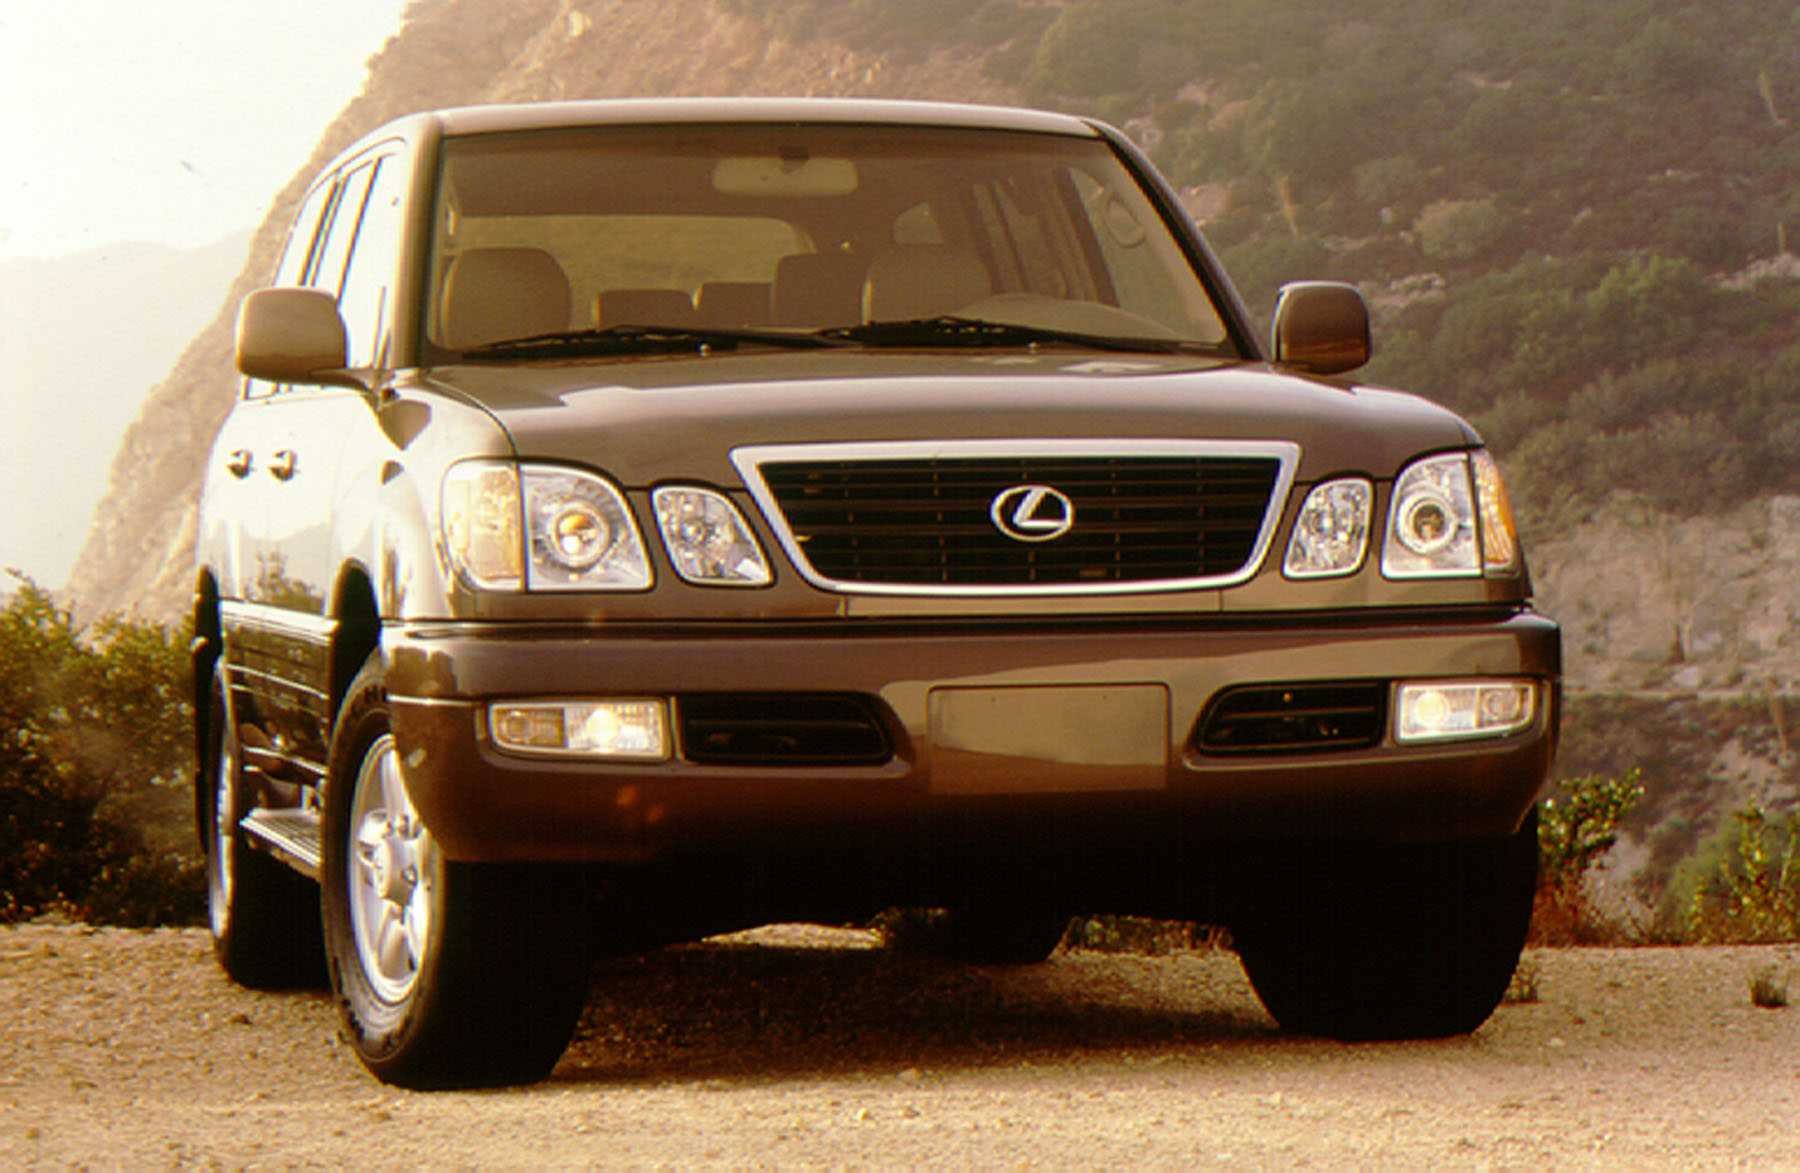 Lexus 470 lx. Lexus lx470 1998-2002. Лексус ЛХ 470. Lexus LX 470 uzj100. Лексус ЛХ 470 1998.